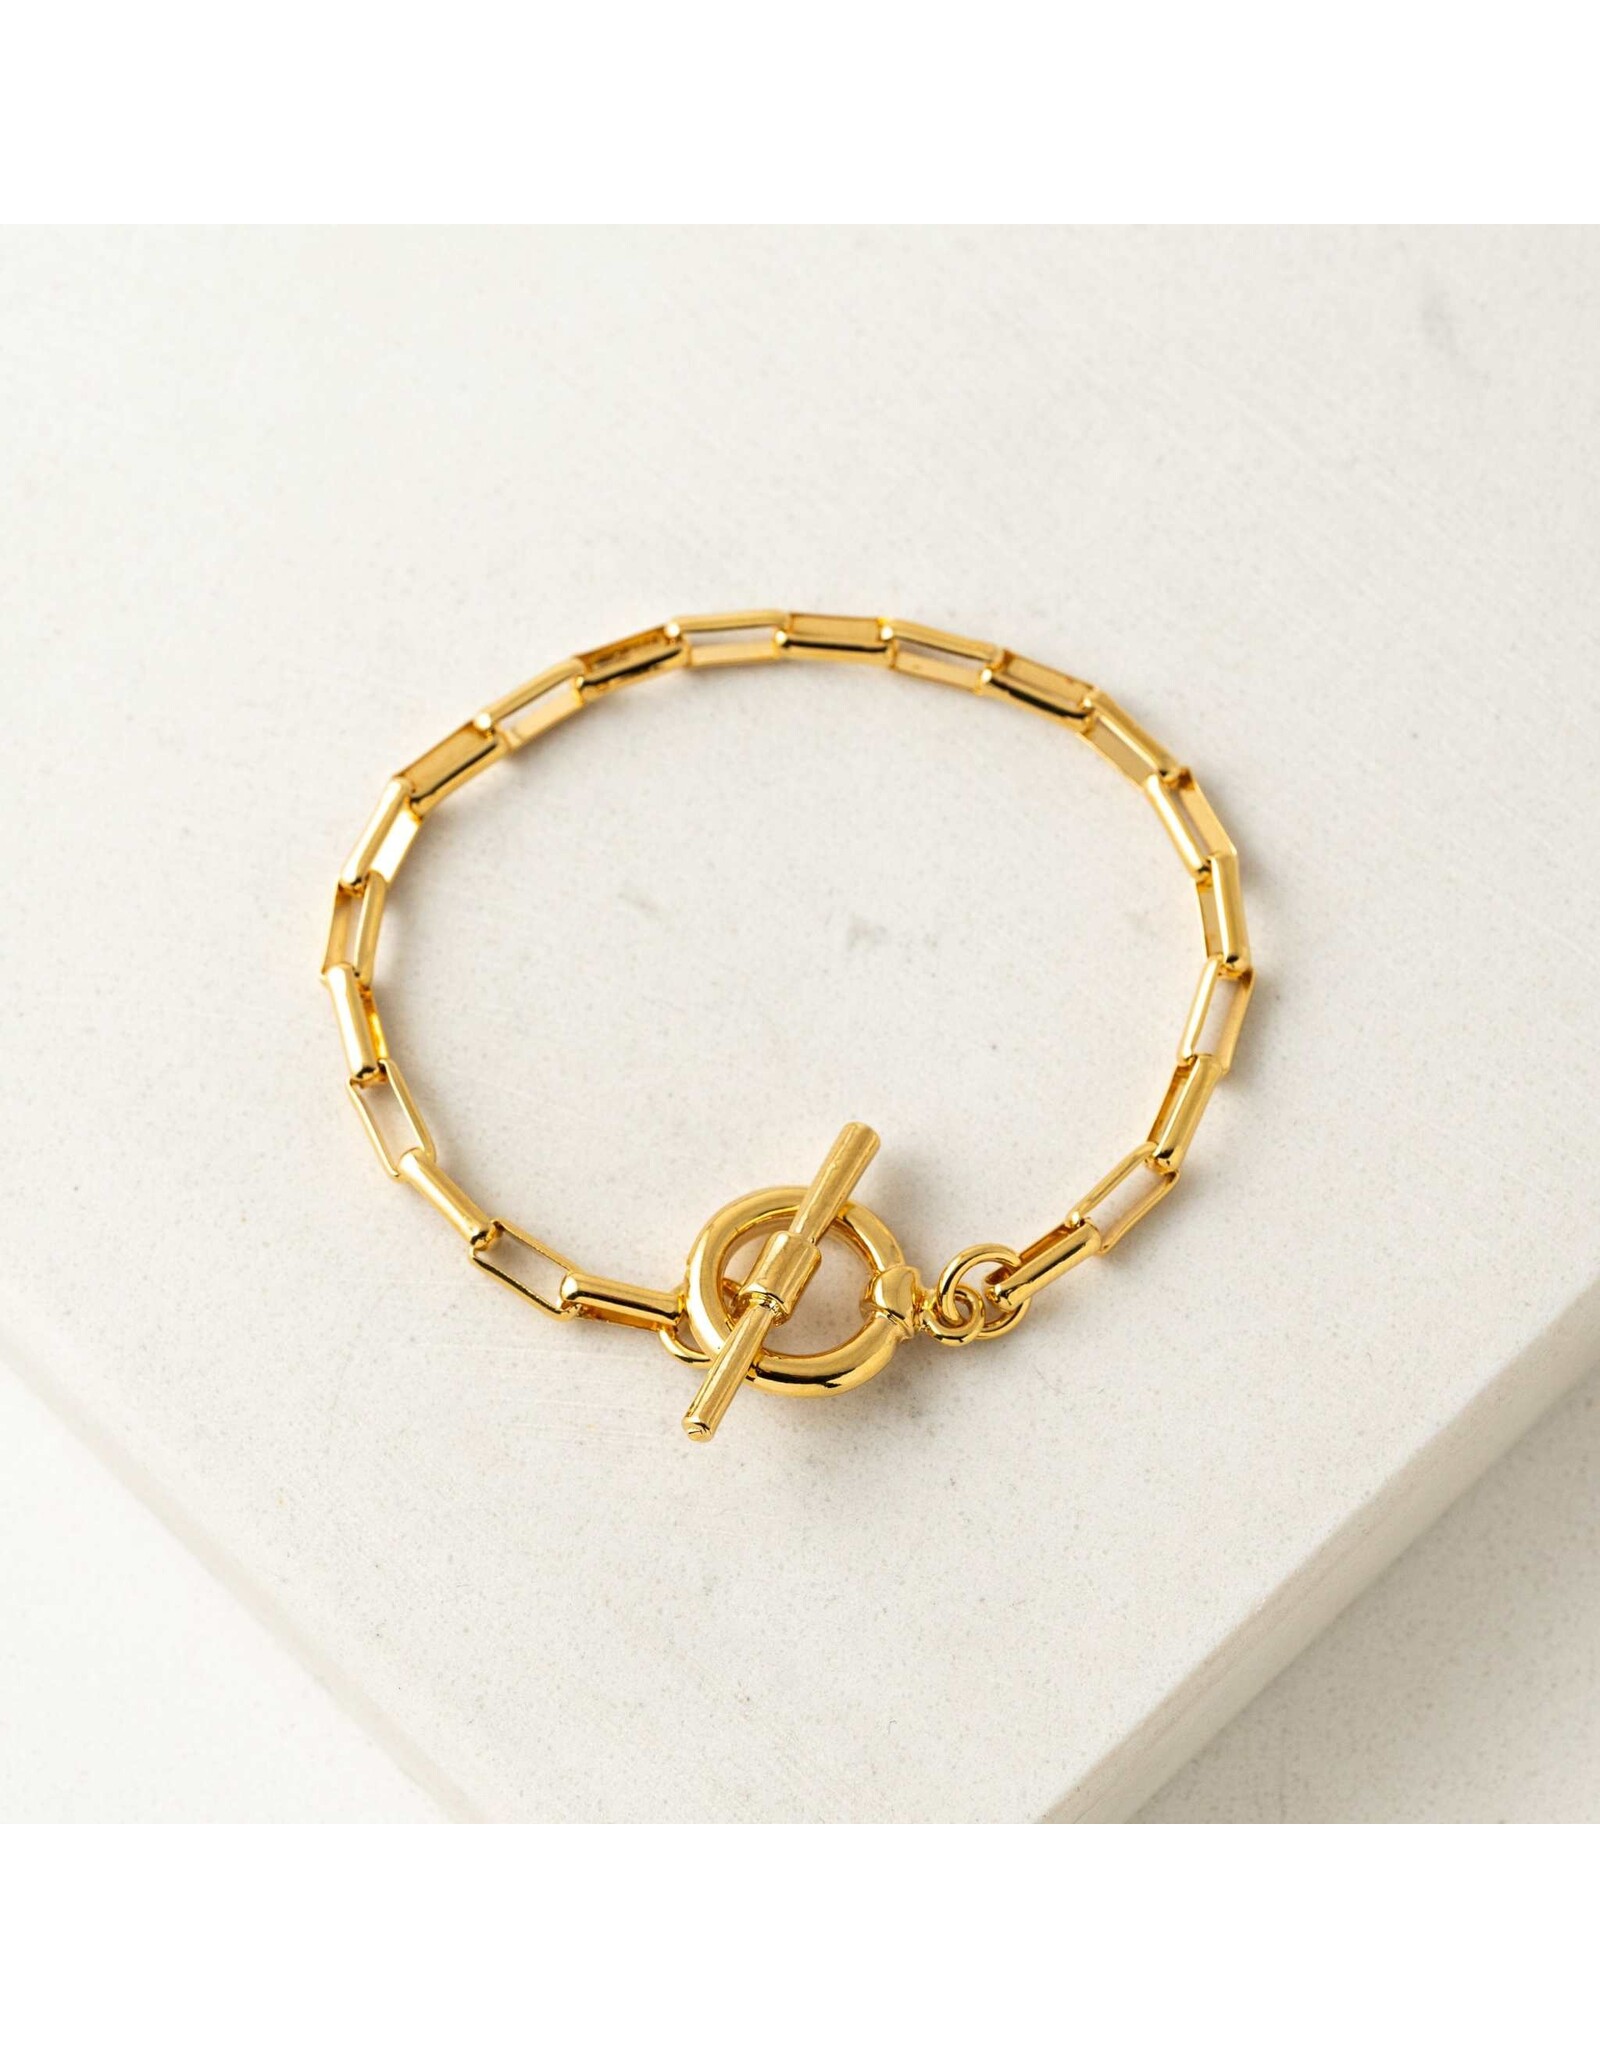 8" Staple Chain Toggle Bracelet - Gold